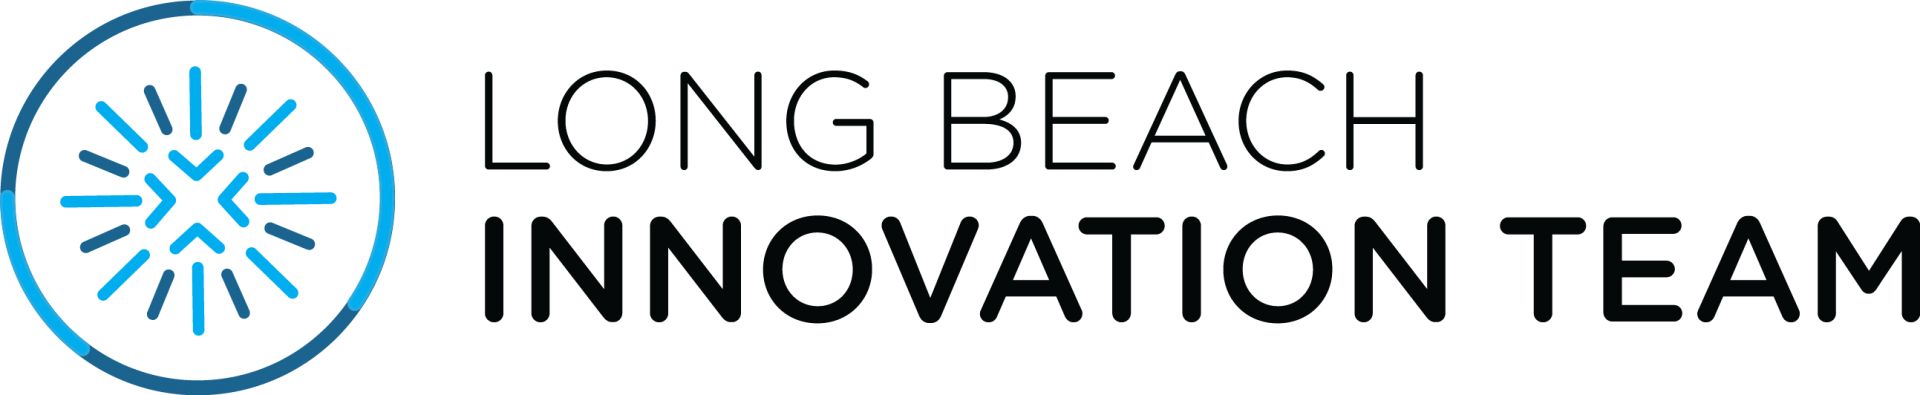 Long Beach Innovation Team logo